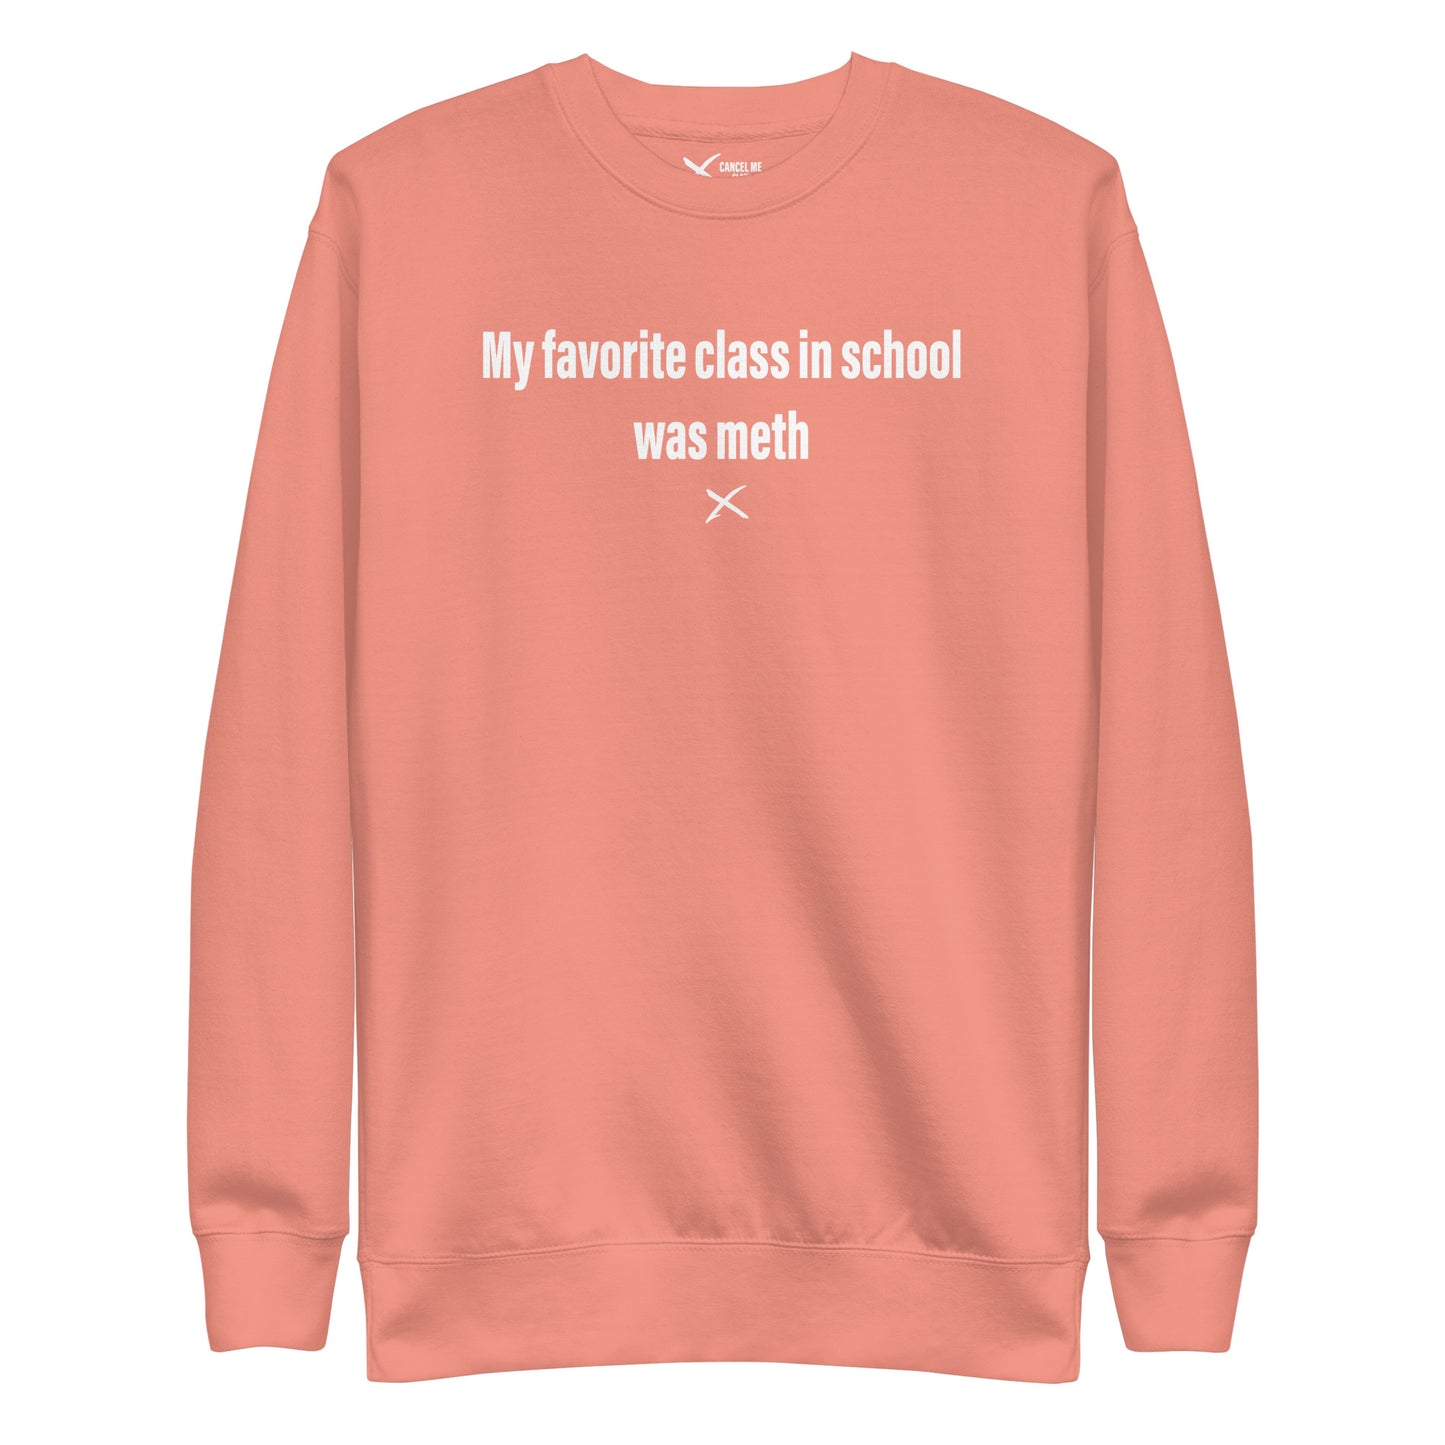 My favorite class in school was meth - Sweatshirt